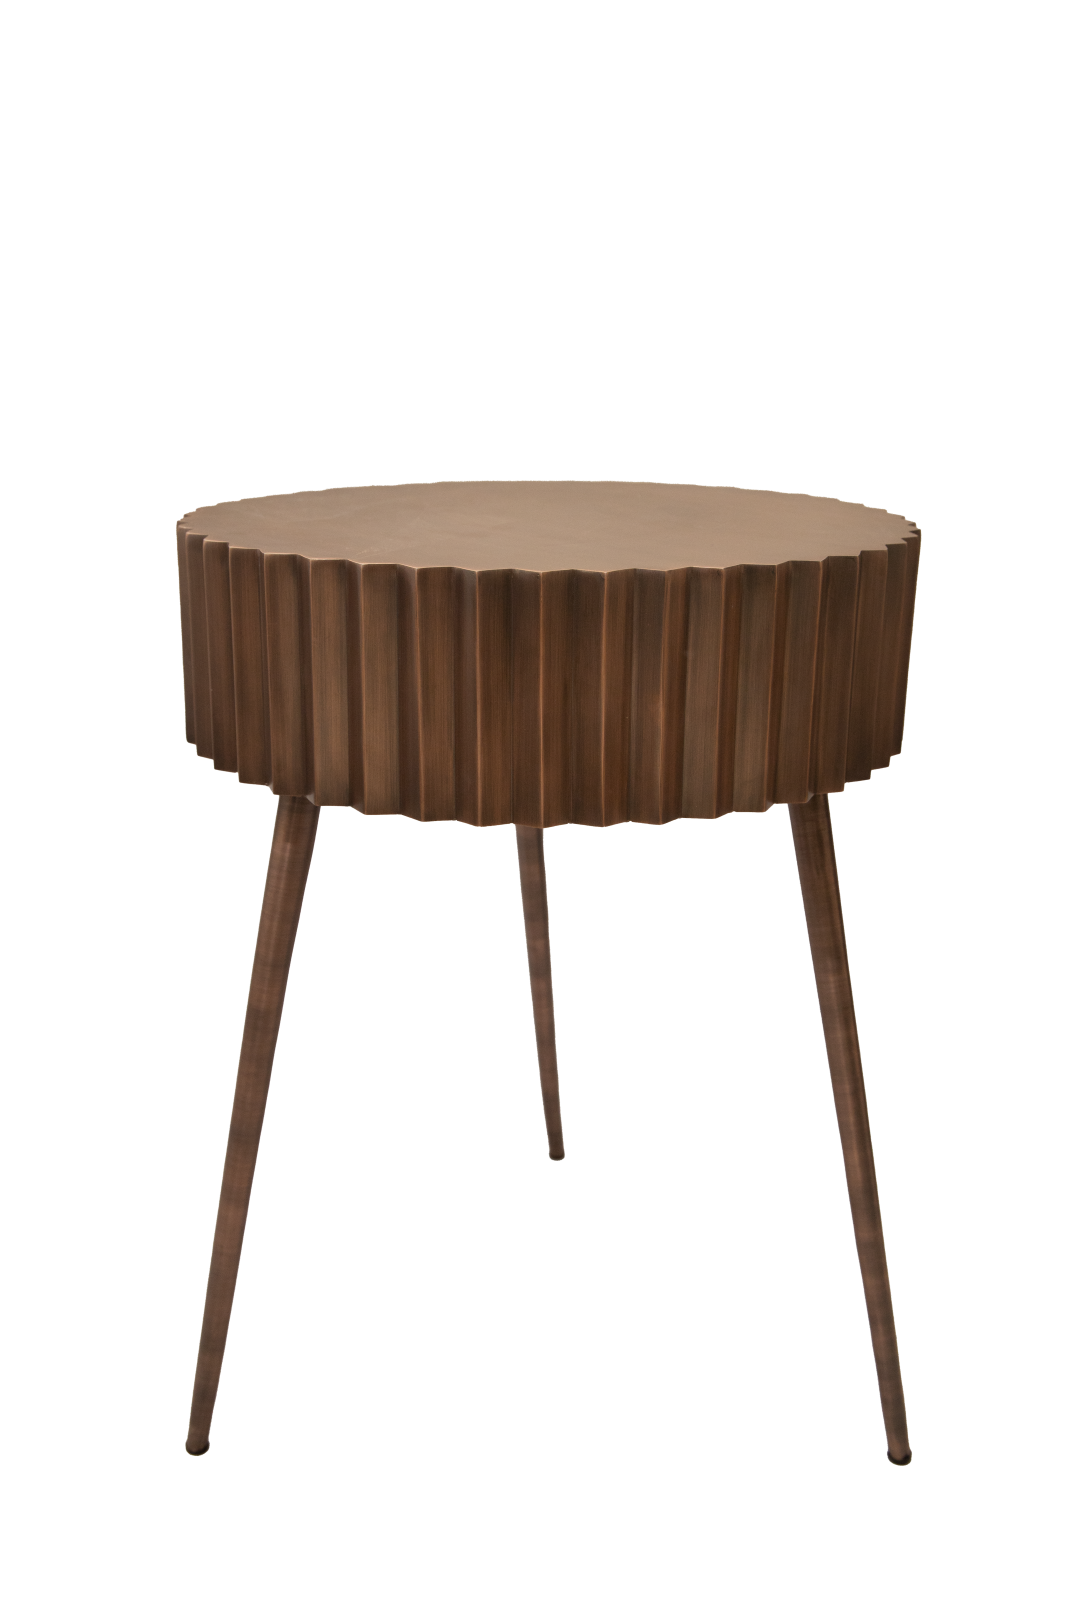 3 Legged Copper Antique Coffee Table